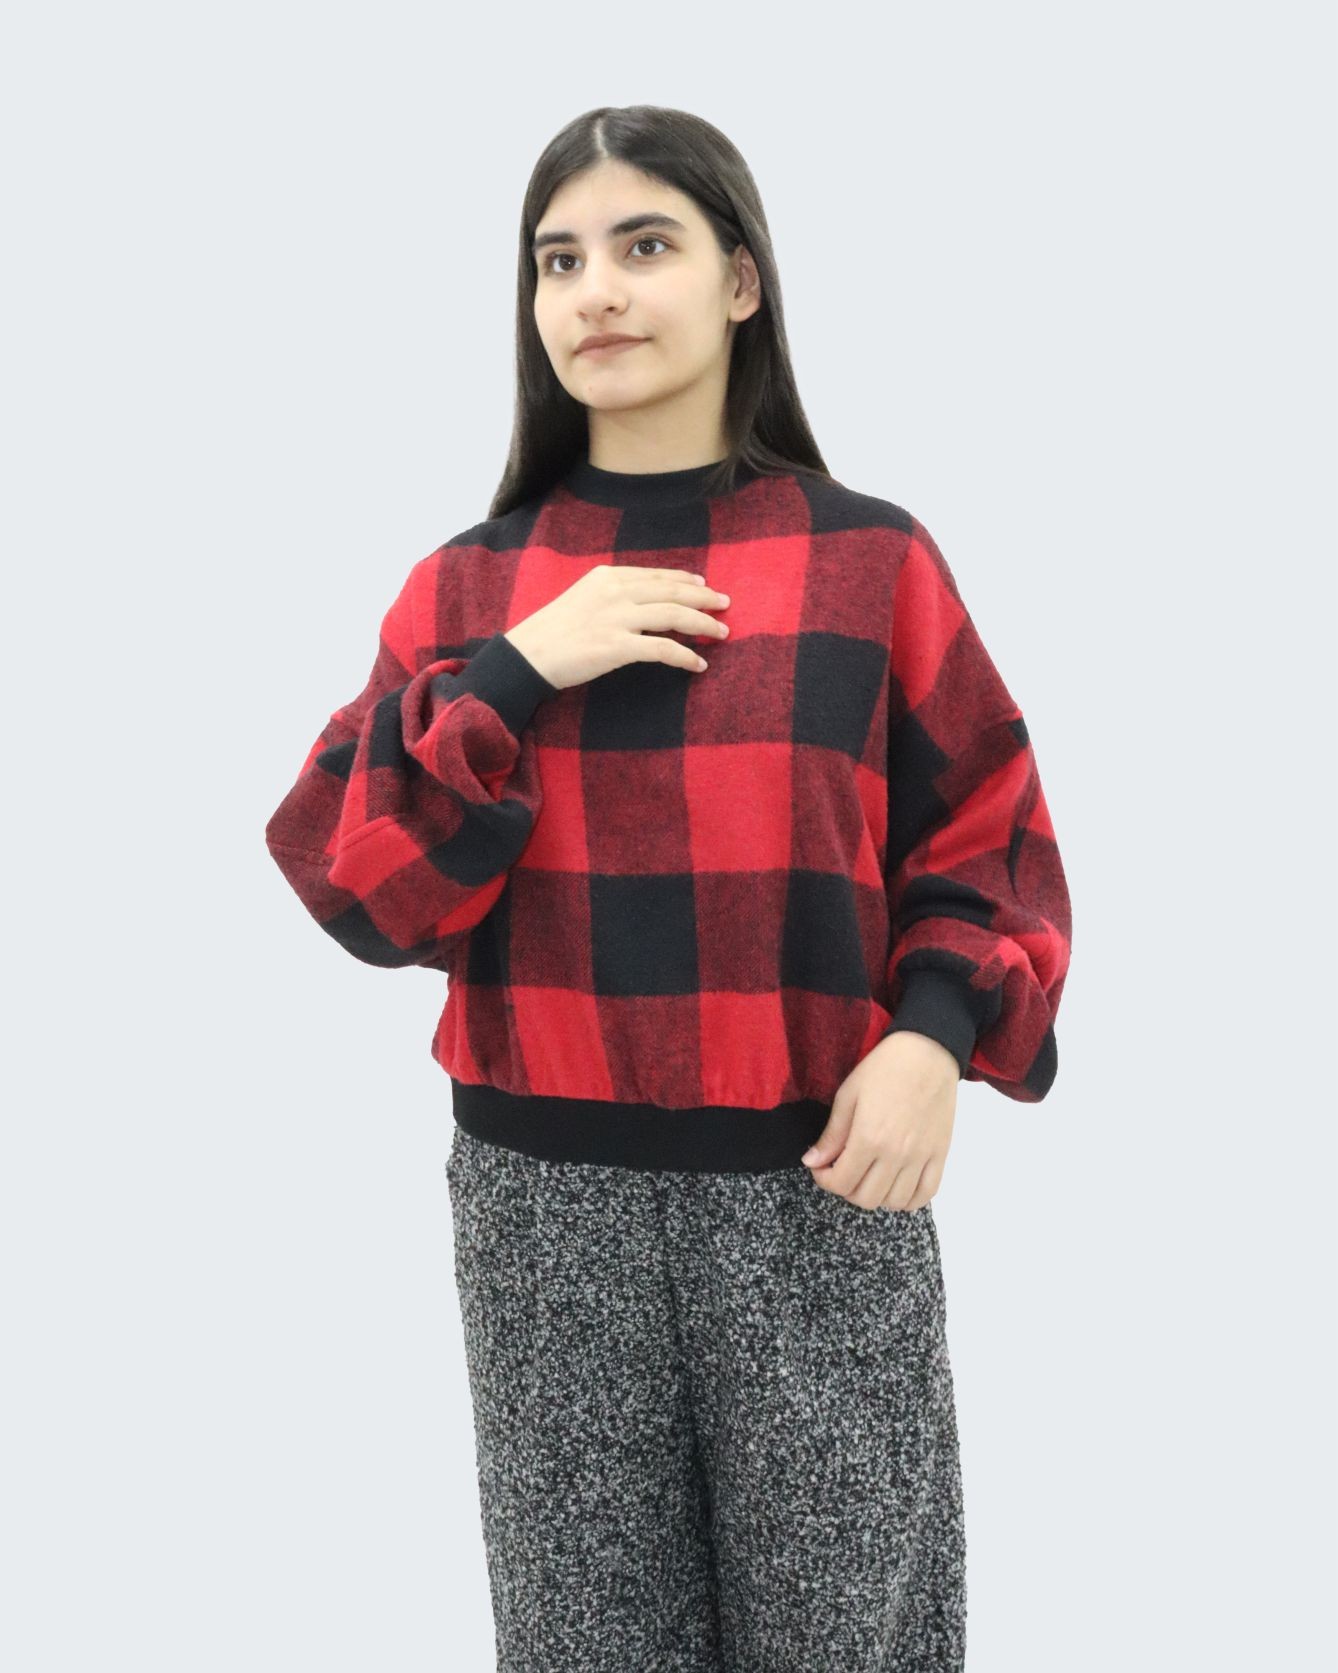 Sweatshirt / Lumberjack Fabric / Plaid Check